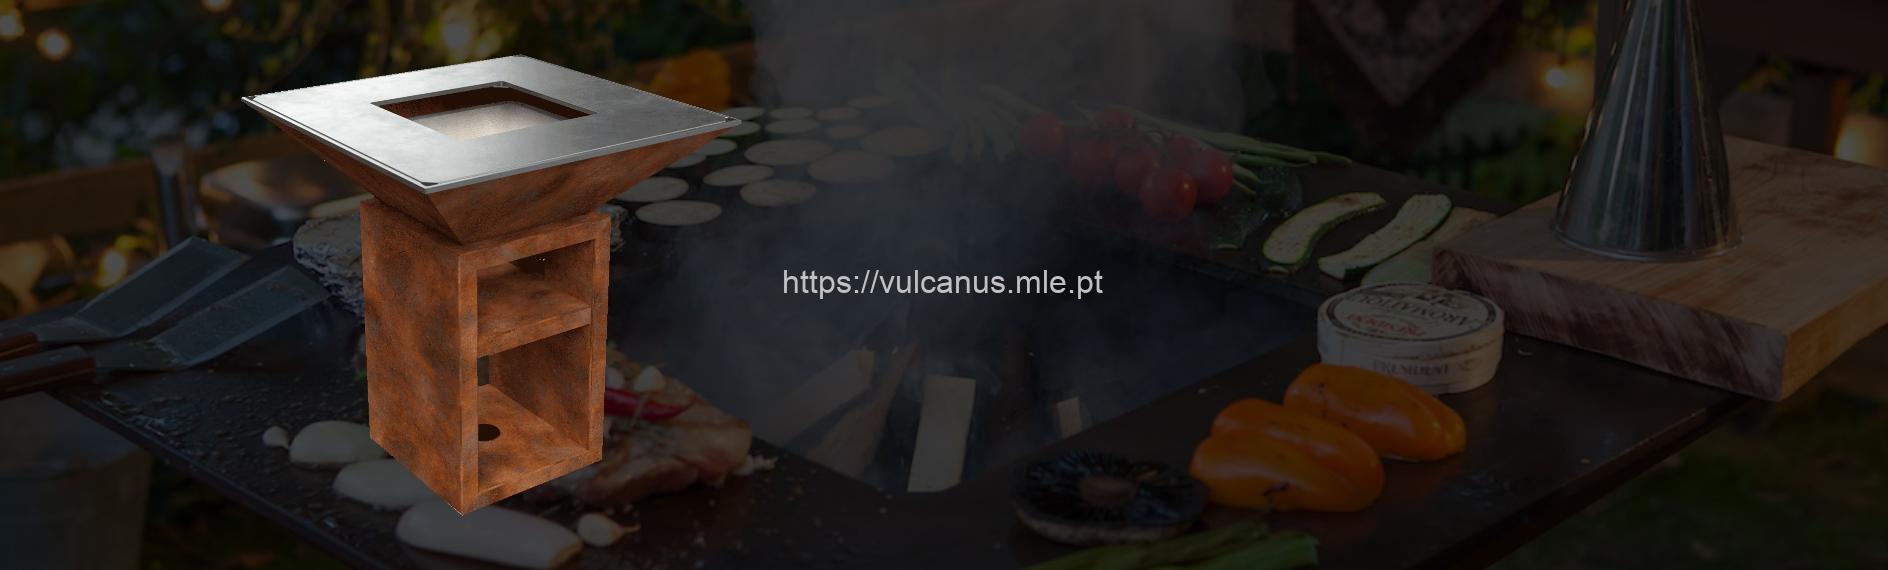 Vulcanus Grill Pro910 Chef